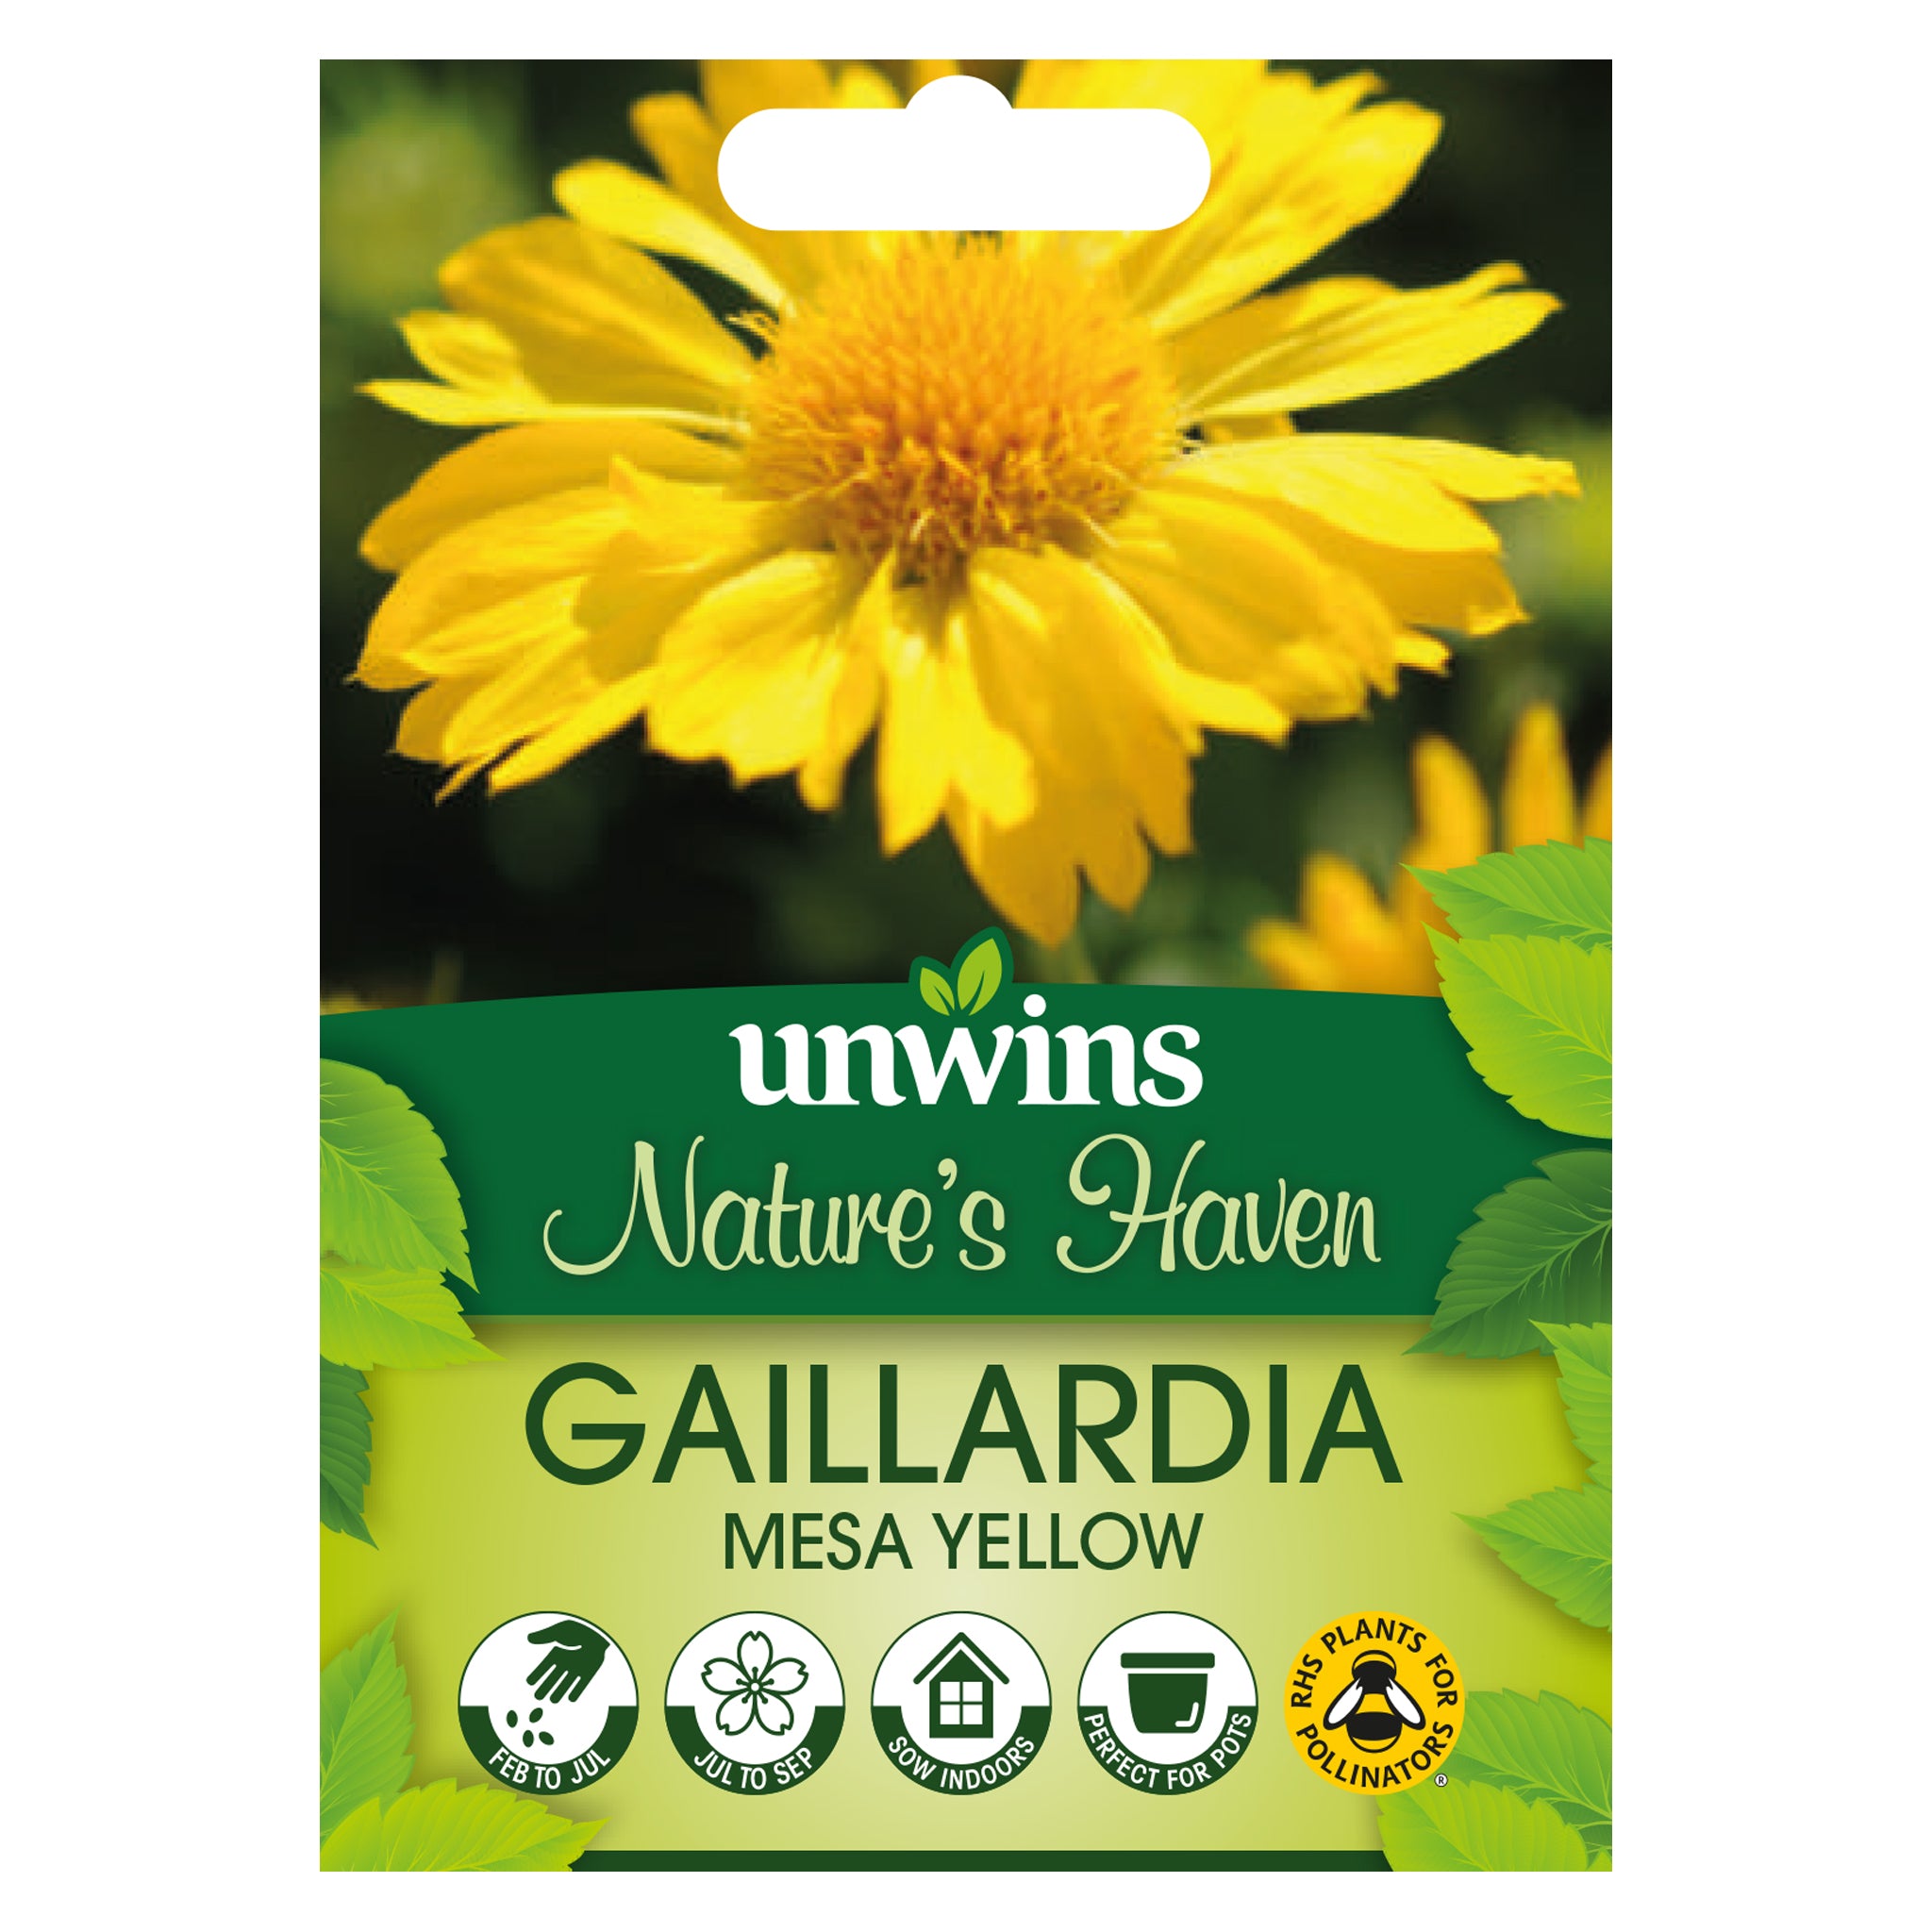 Nature's Haven Gaillardia Mesa Yellow Seeds